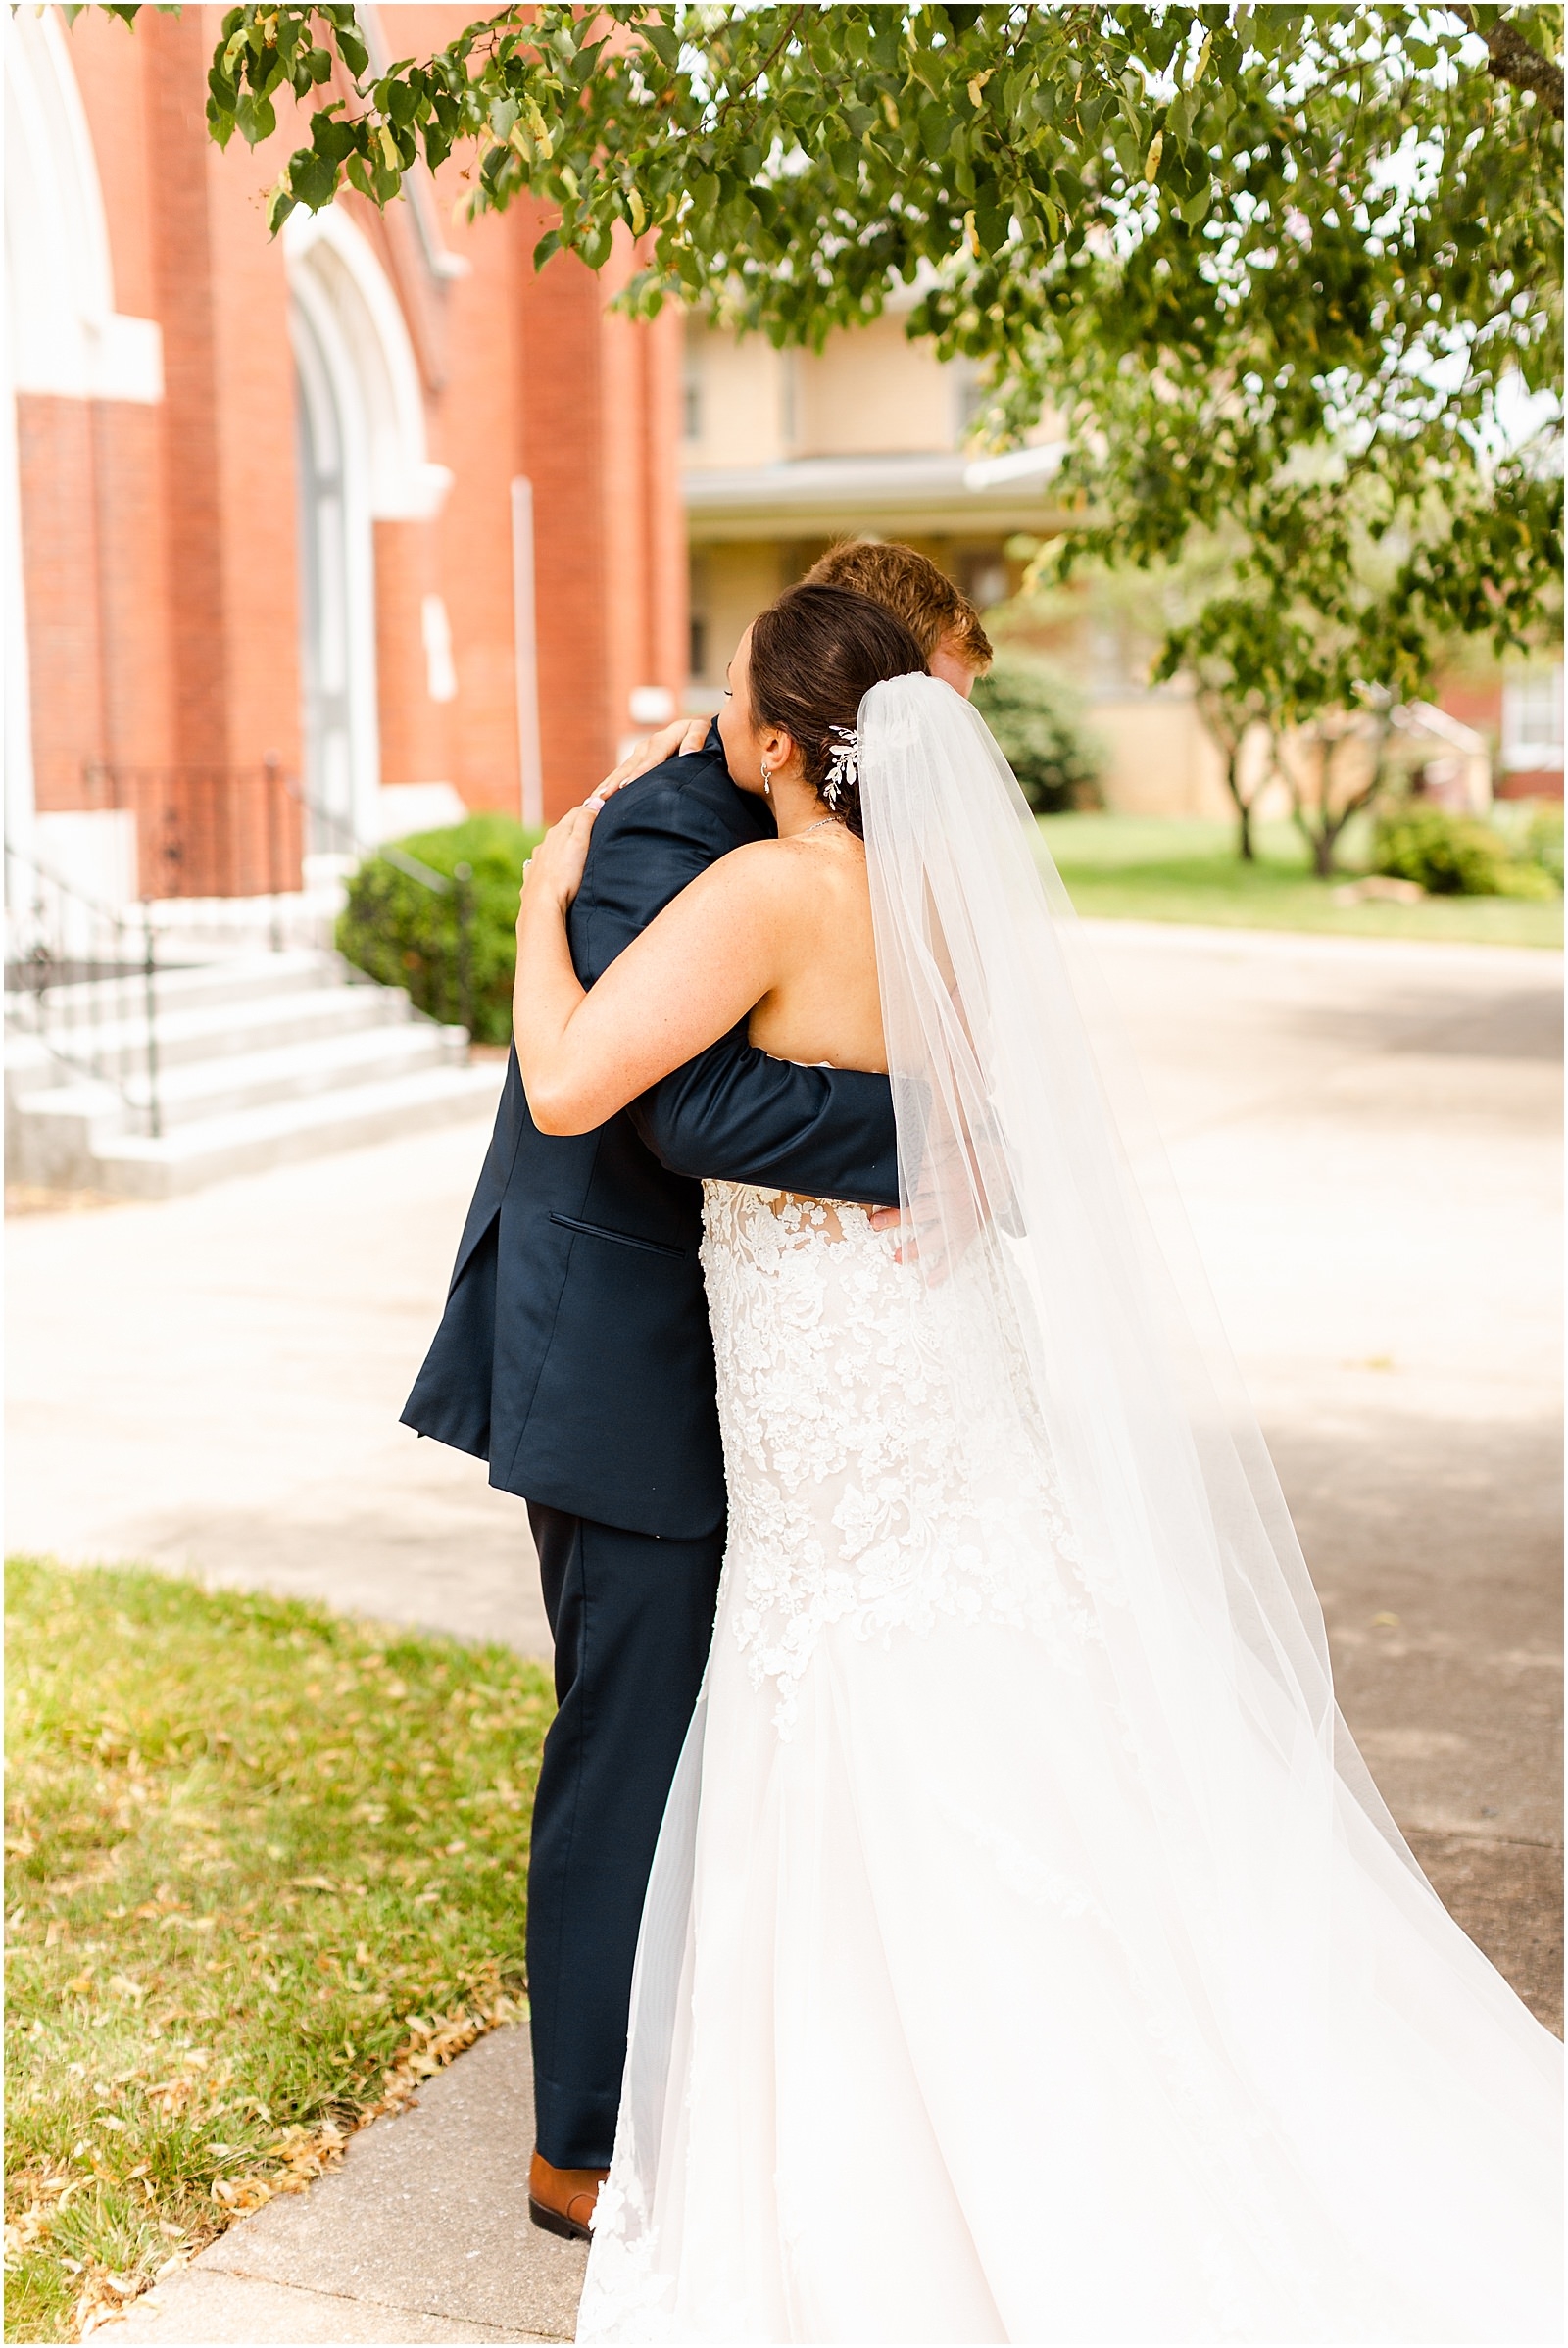 Deidra and Andrew | A Huntingburgh Indiana Wedding Bret and Brandie | Evansville Photographers | @bretandbrandie-0049.jpg